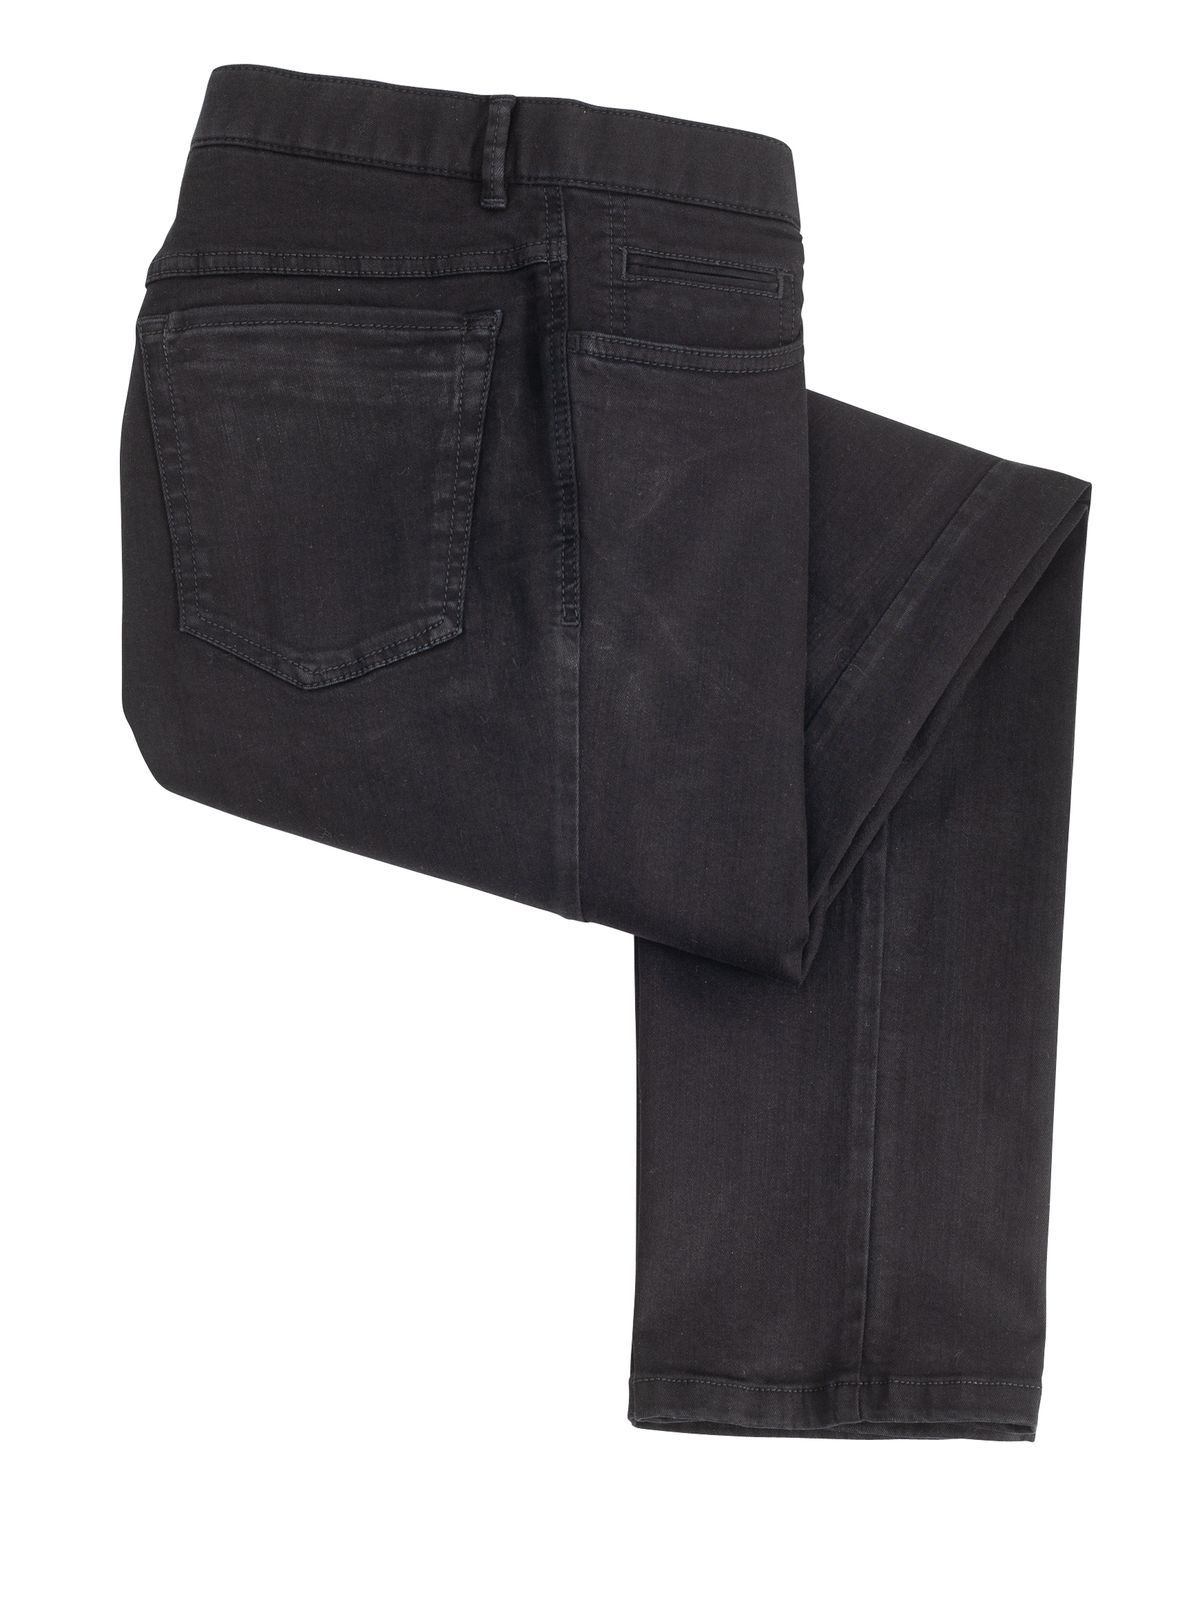 6-Pocket Stretch Jeans - Maus & Hoffman